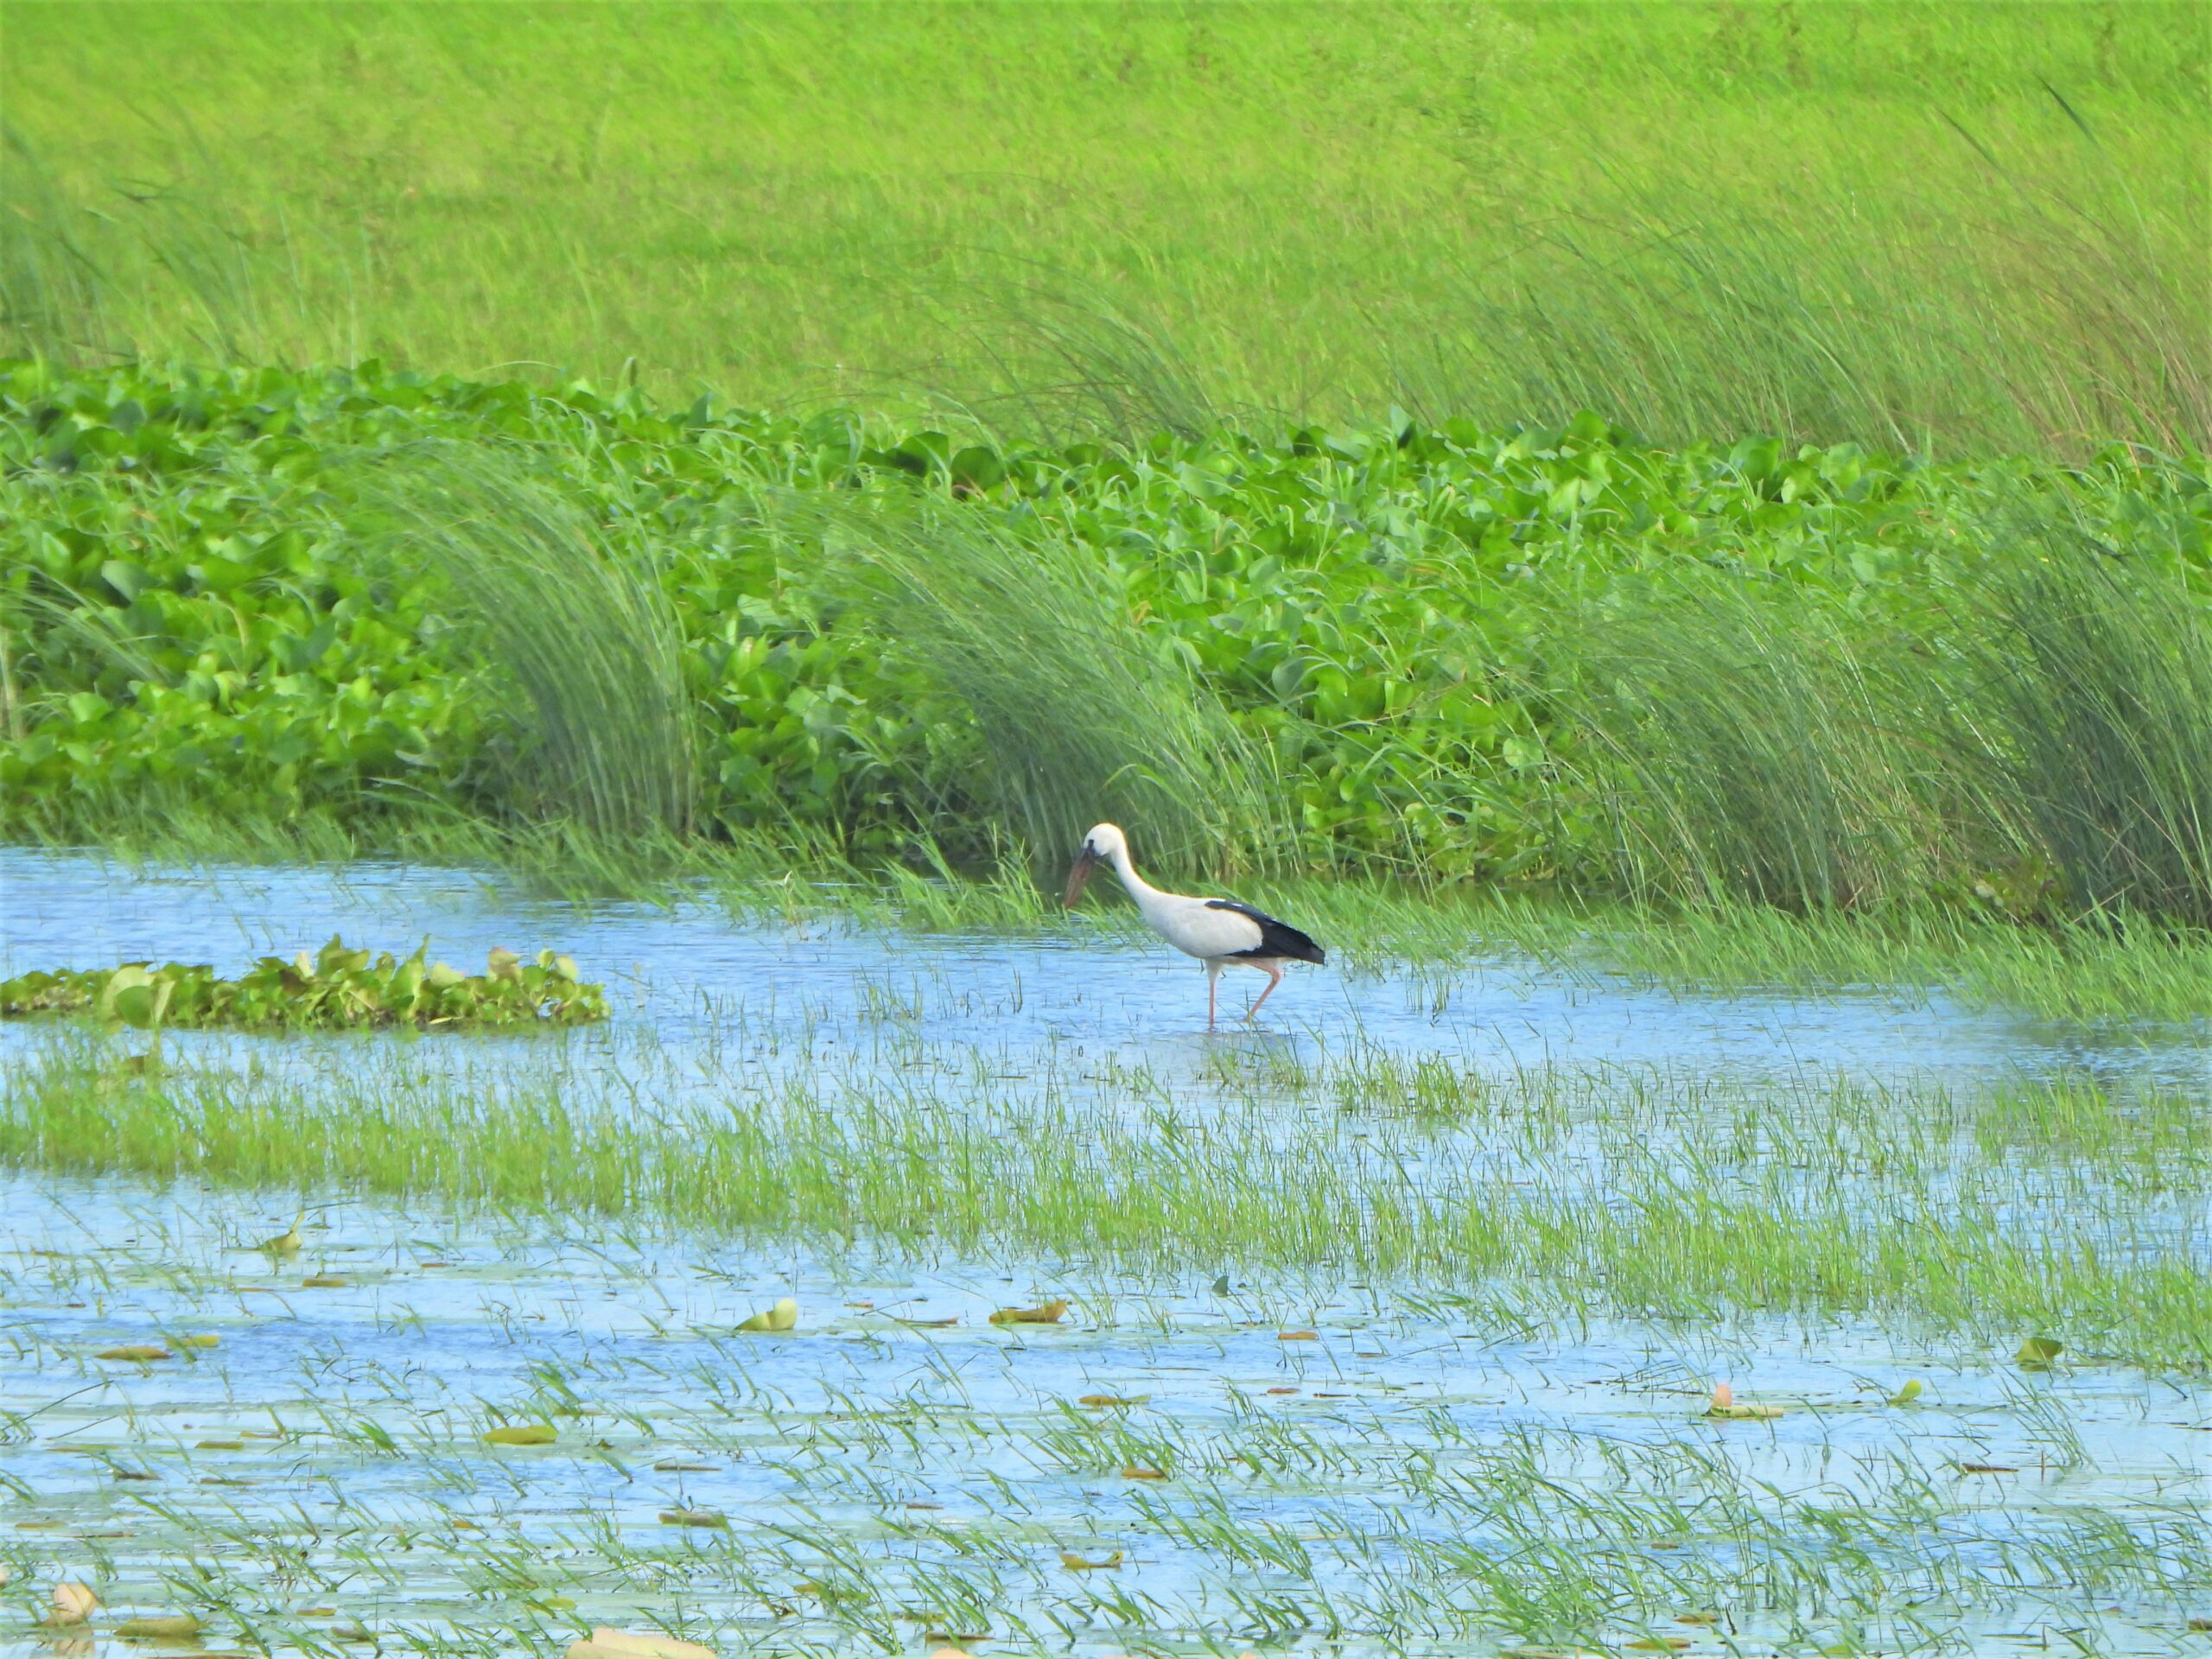 Koshi-Tappu: A wetland haven and its people !